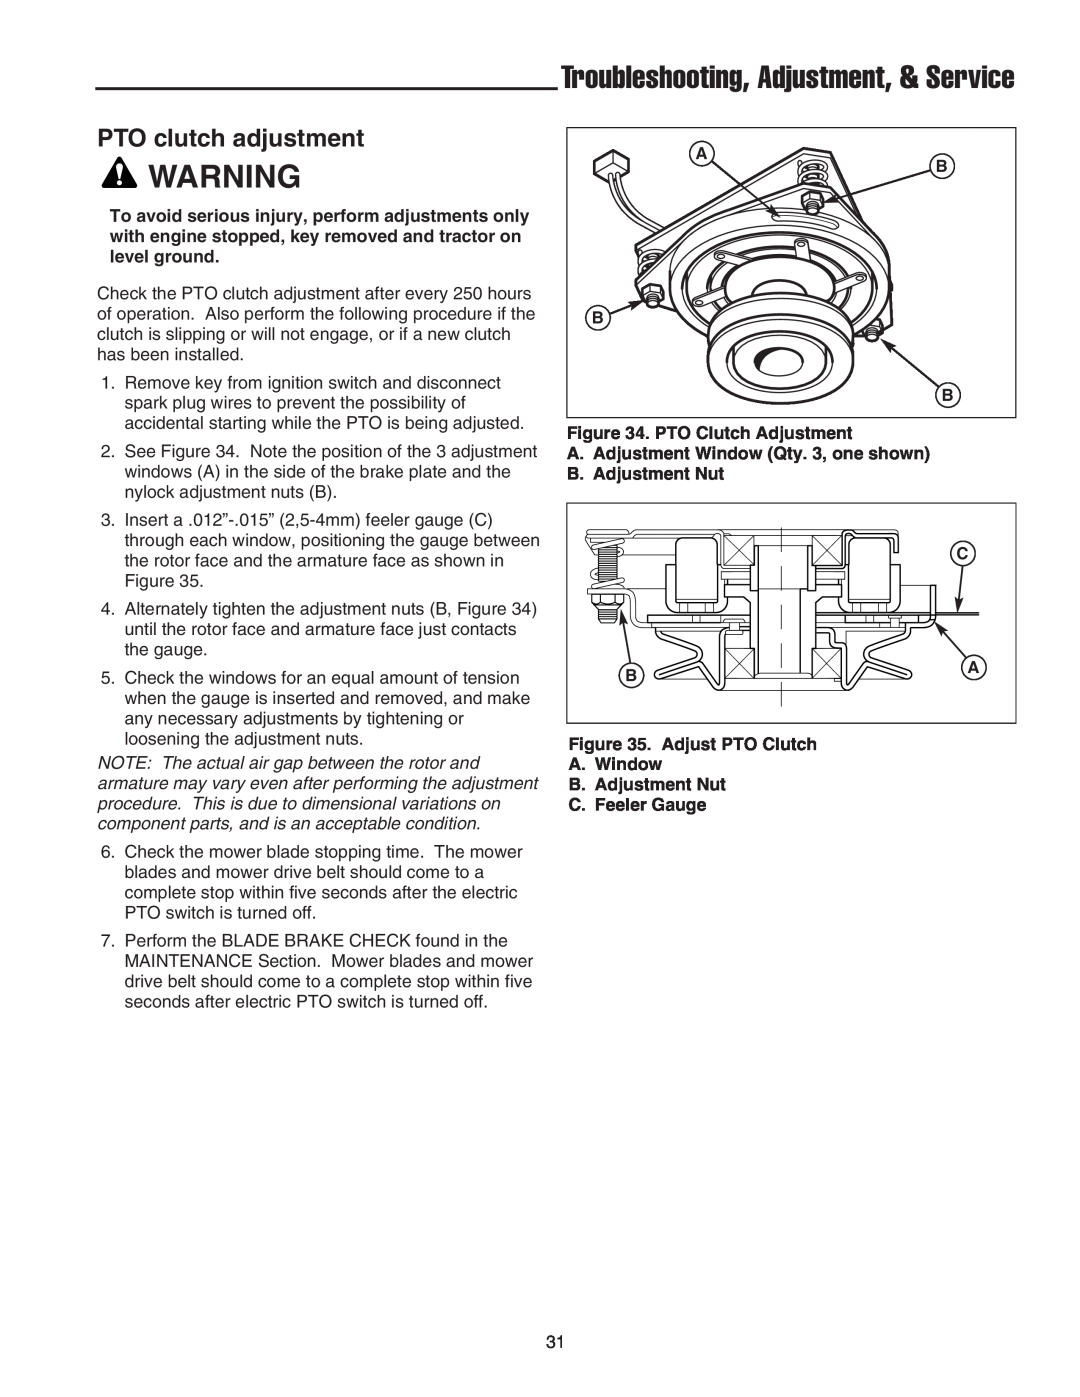 Snapper LT-200 manual PTO clutch adjustment, Troubleshooting, Adjustment, & Service 